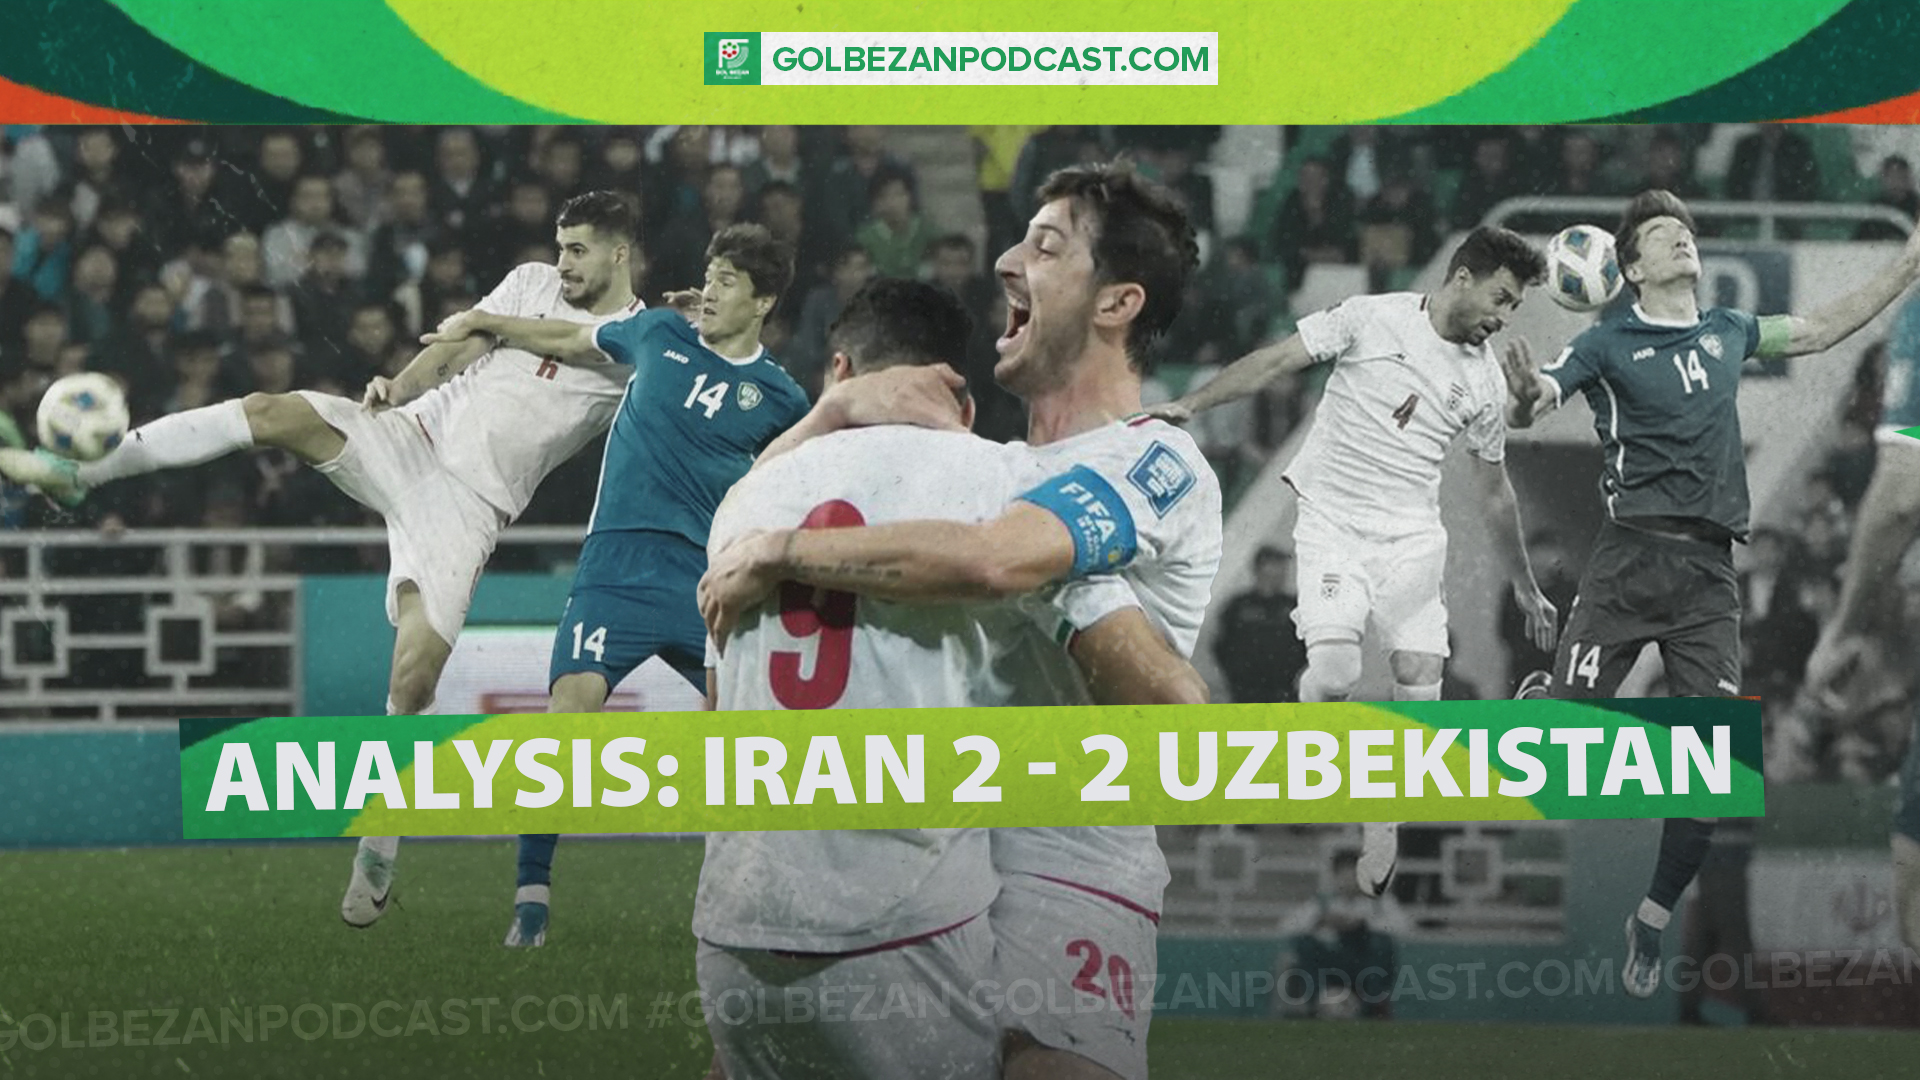 Analysis: Iran 2 - 2 Uzbekistan